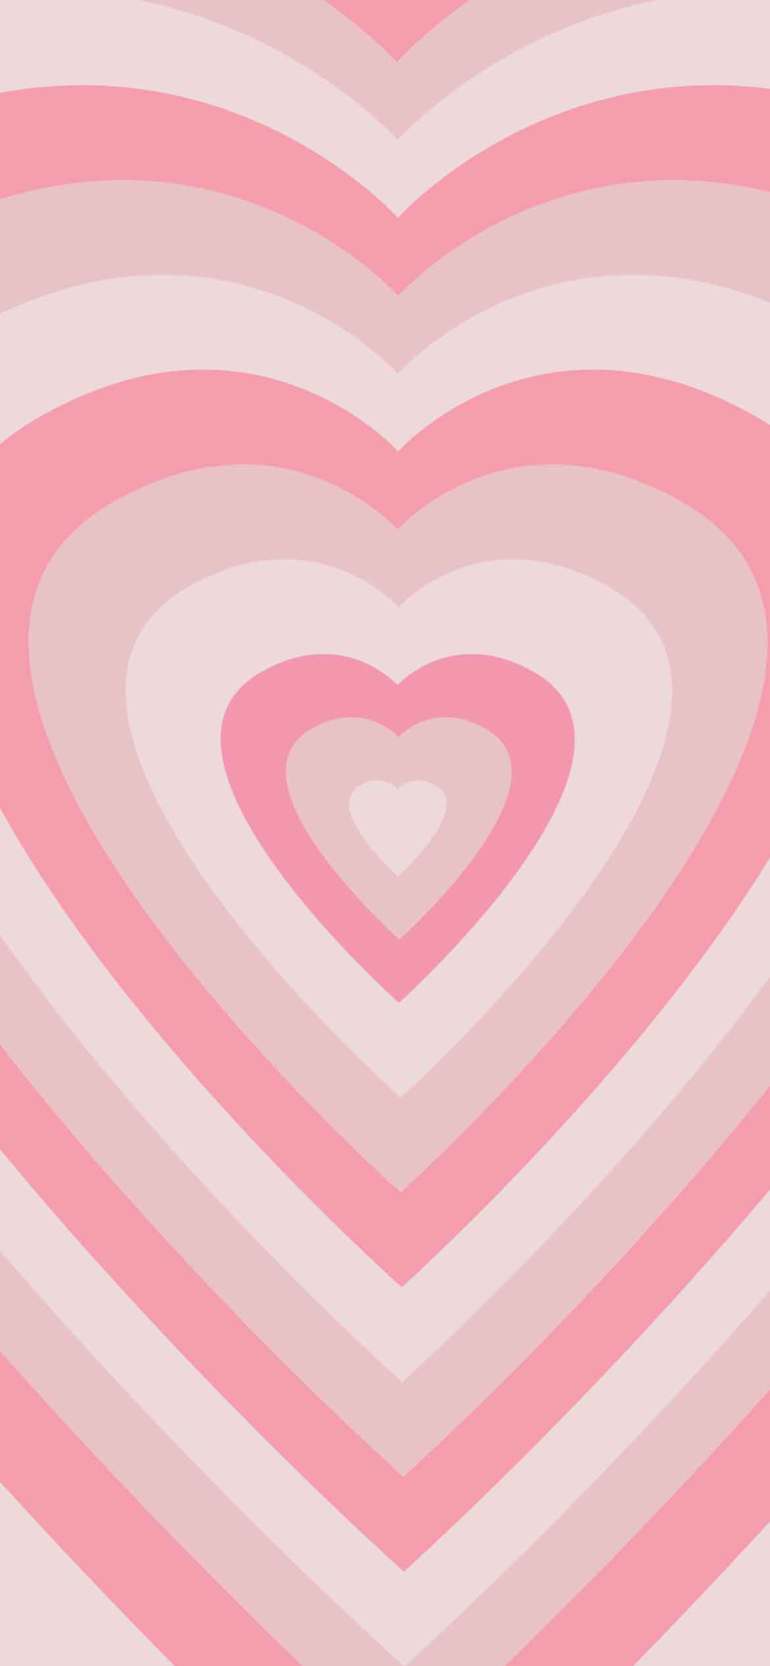  Pinke Hintergrundbild 770x1666. Pink Aesthetic Picture : Layered Heart Shapes Wallpaper for Phone Wallpaper